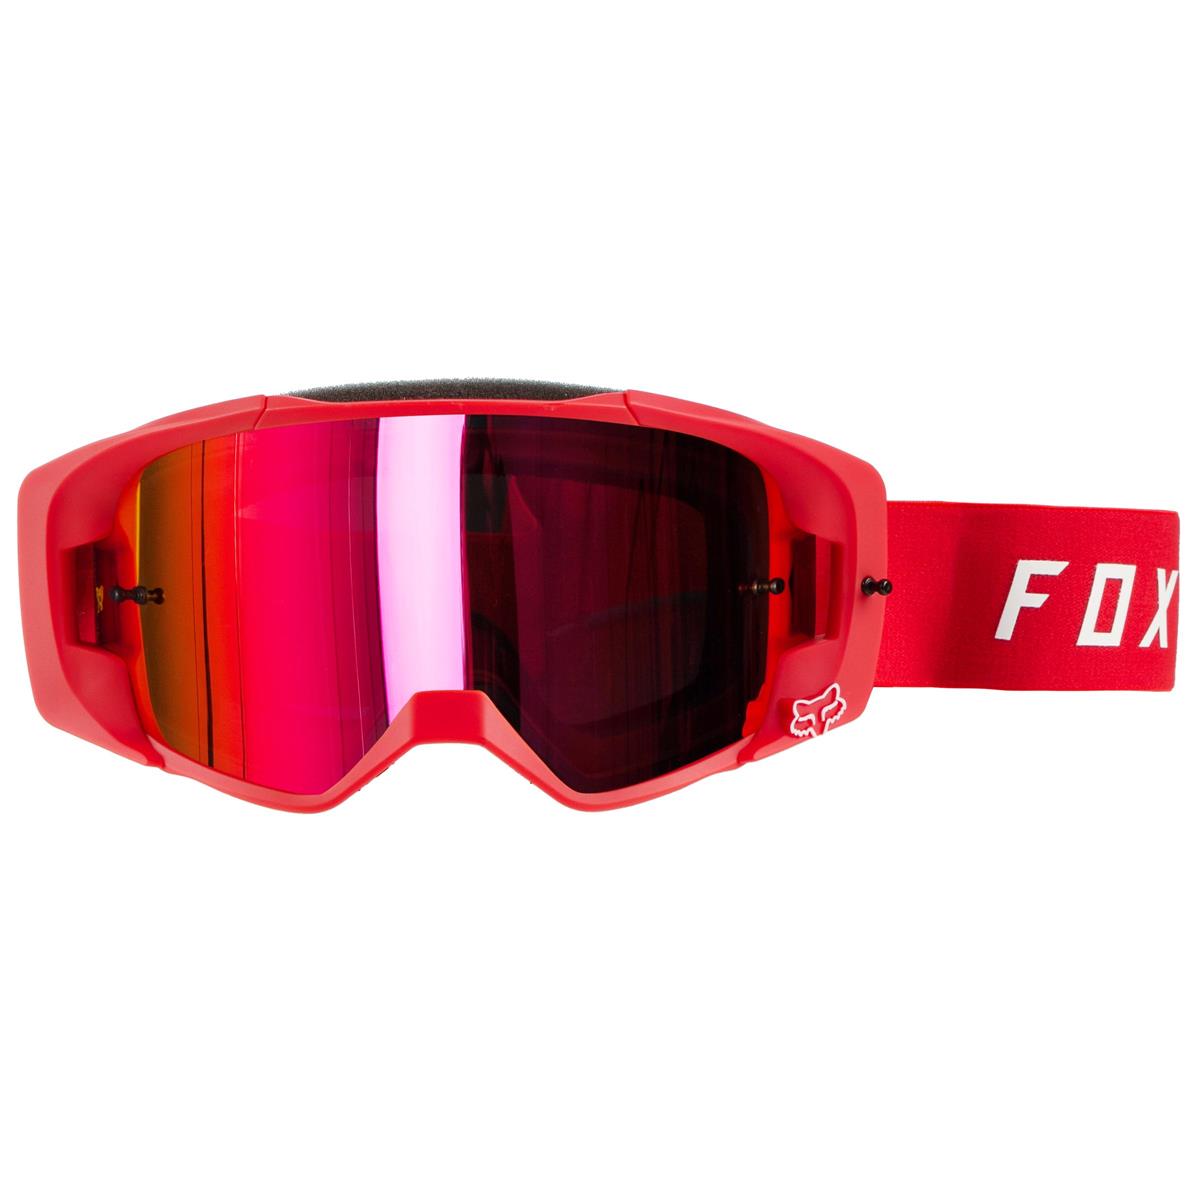 Fox Crossbrille VUE Rot - Rot verspiegelt, Anti-Fog